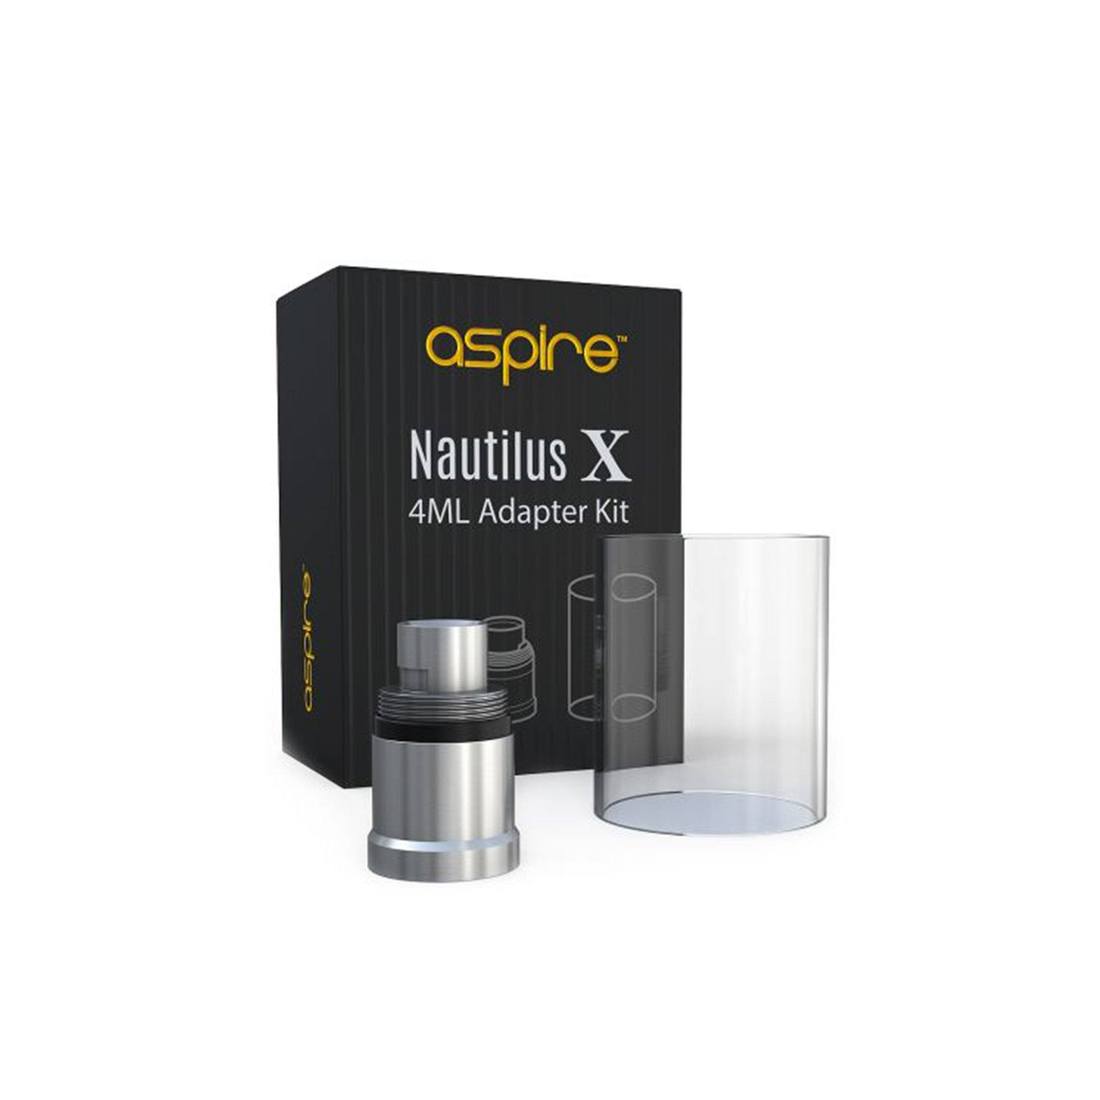 Aspire Nautilus X Replacement Glass / Adaptor Kit - OB Vape Shop Ireland | Free Next Day Delivery Over €50 | OB Vape Ireland's Premier Vape Shop | OB Bar Disposable Vape